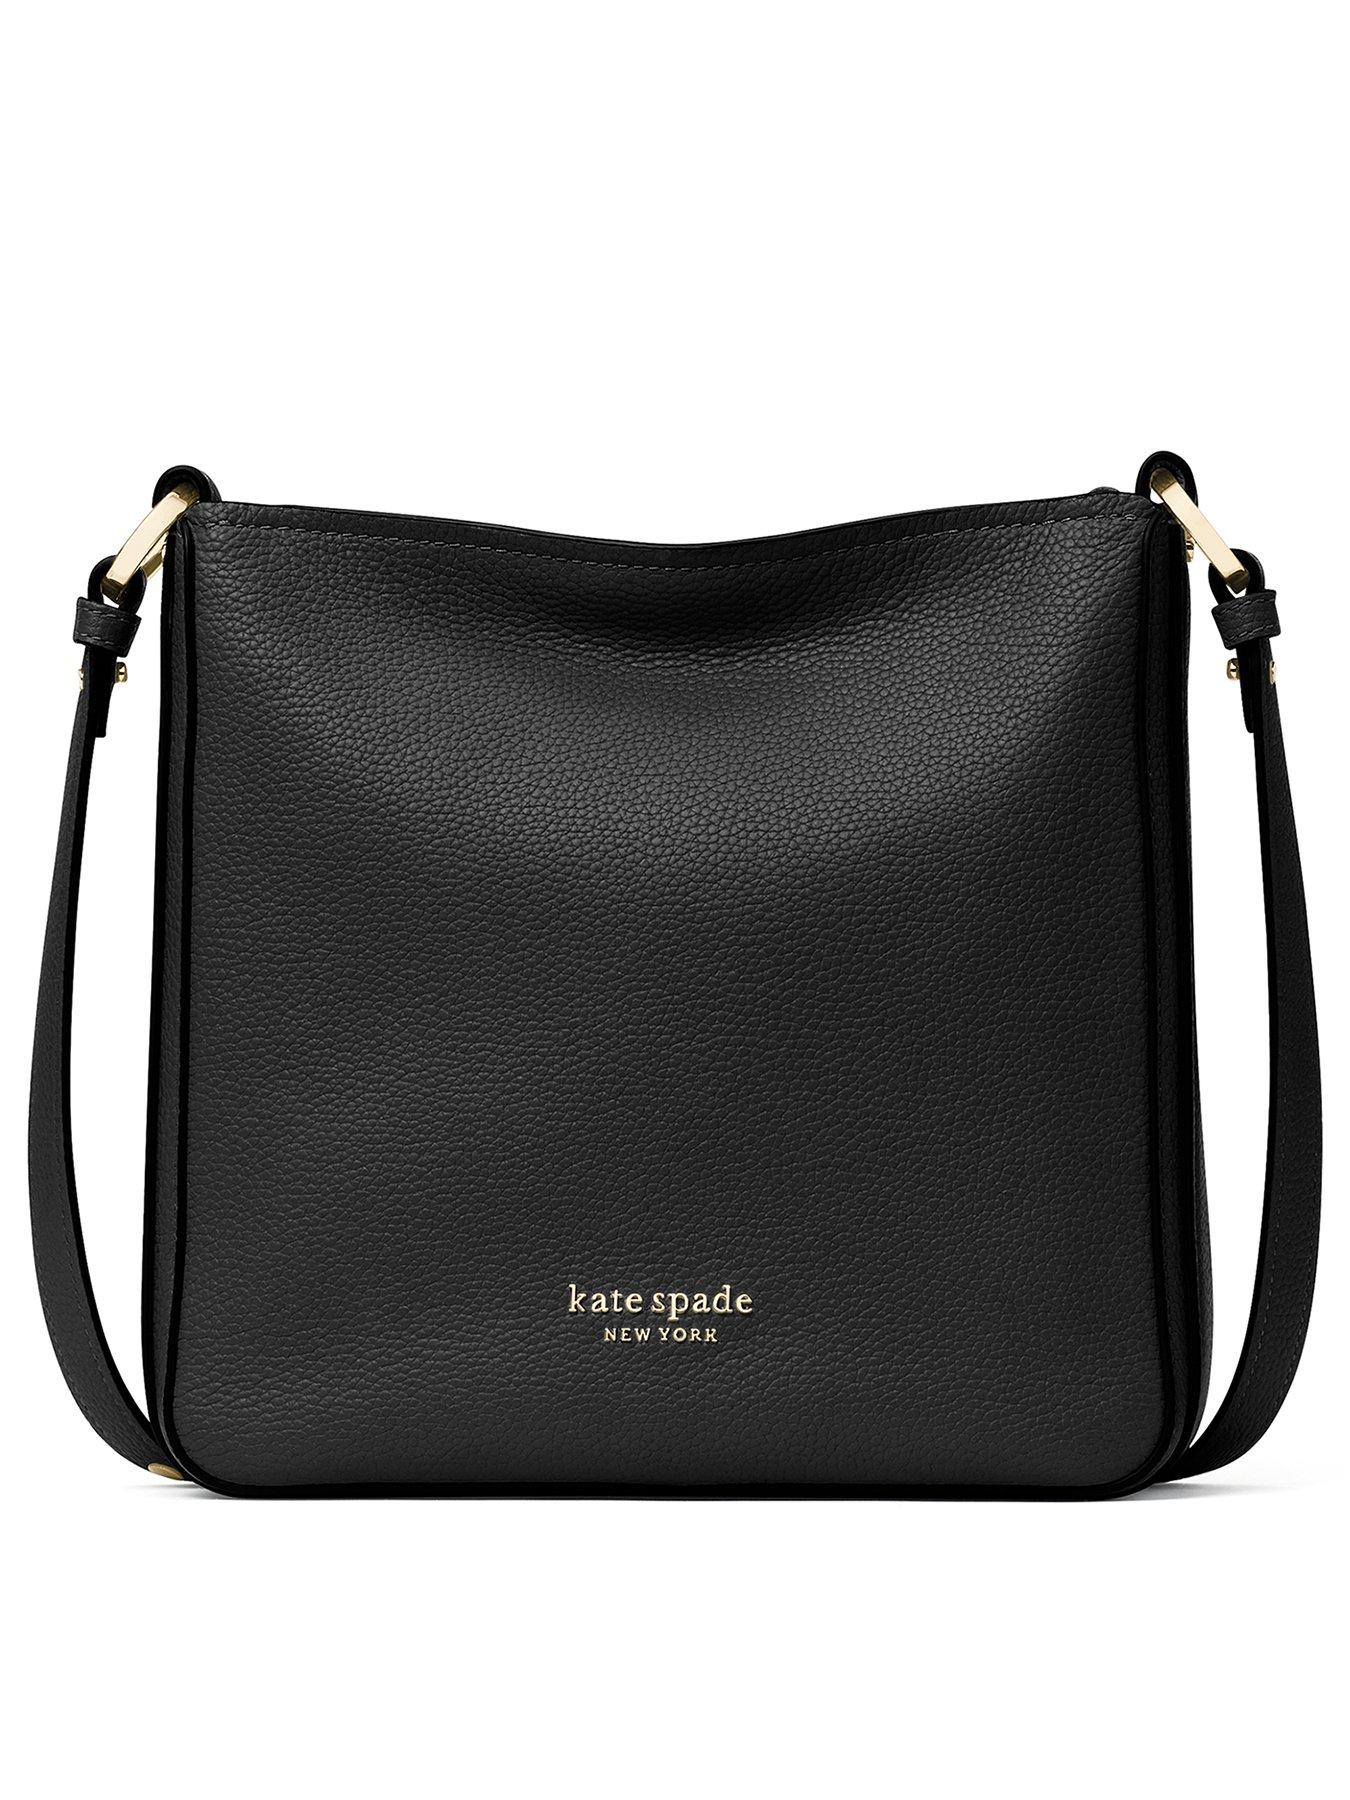 Kate Spade New York Hudson Small Pebbled Leather Messenger Bag - Black |  